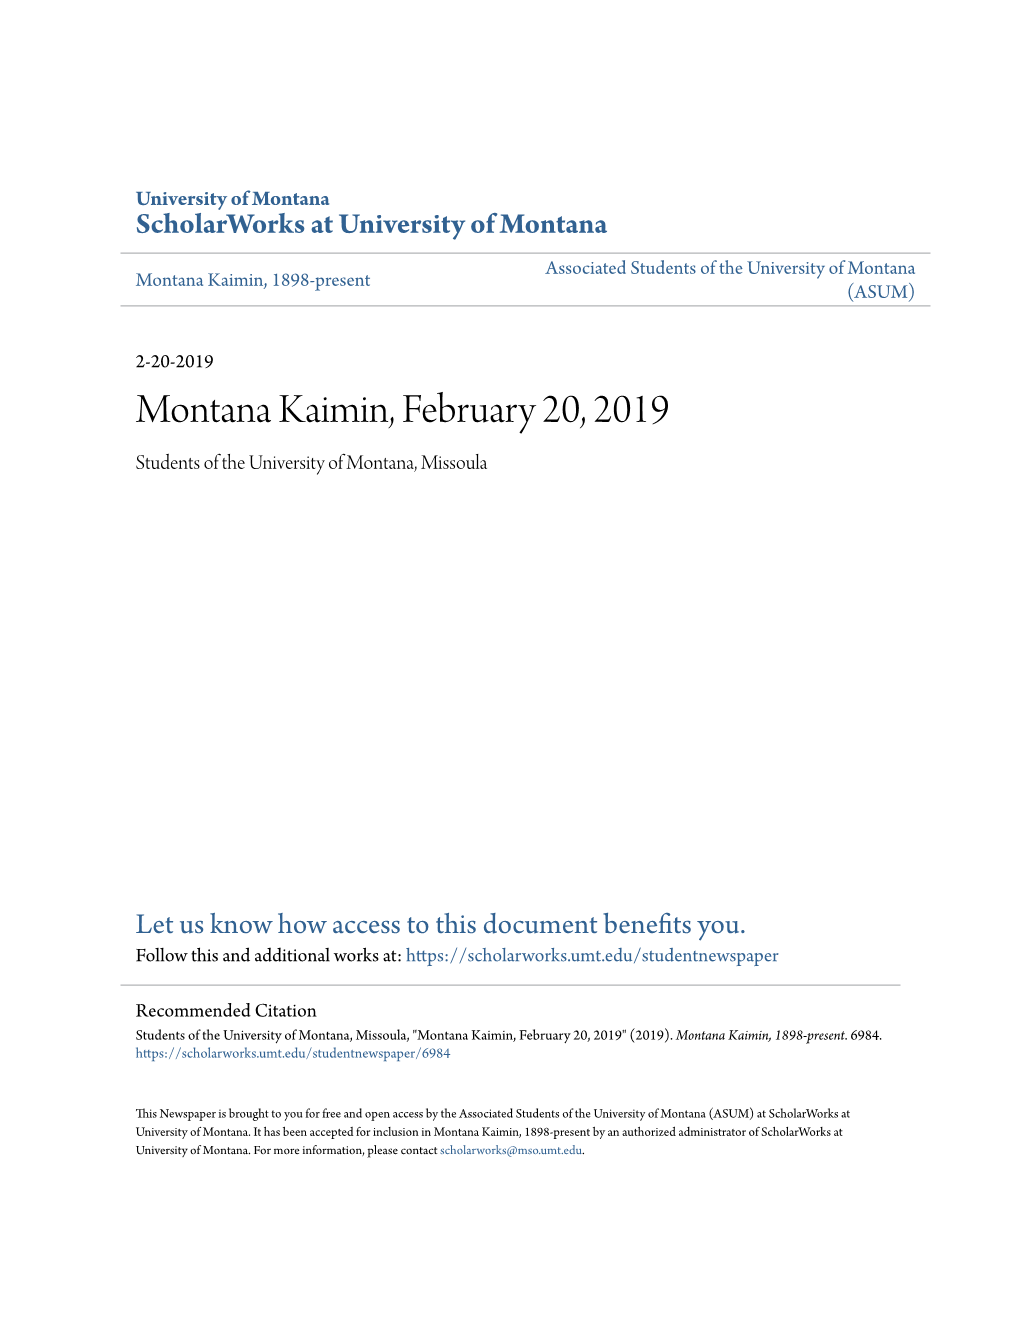 Montana Kaimin, February 20, 2019 Students of the University of Montana, Missoula